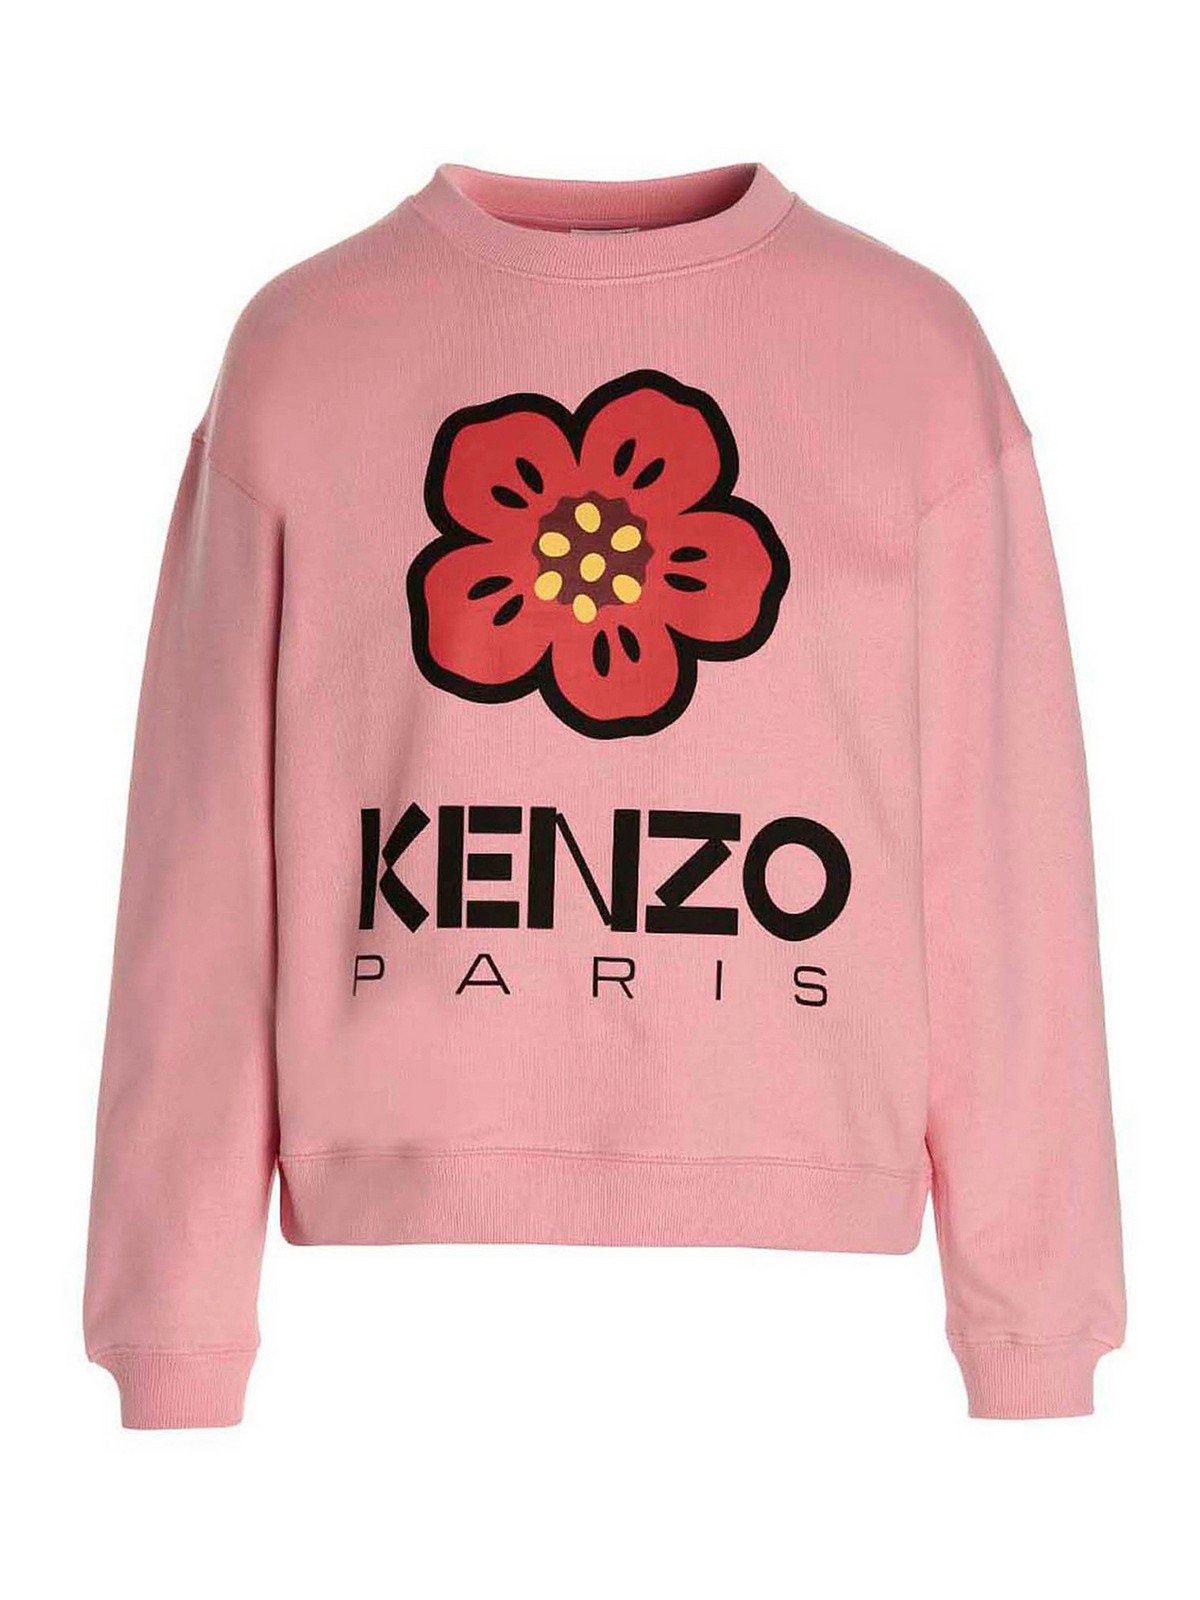 Kenzo Paris Sweatshirt In Rosado